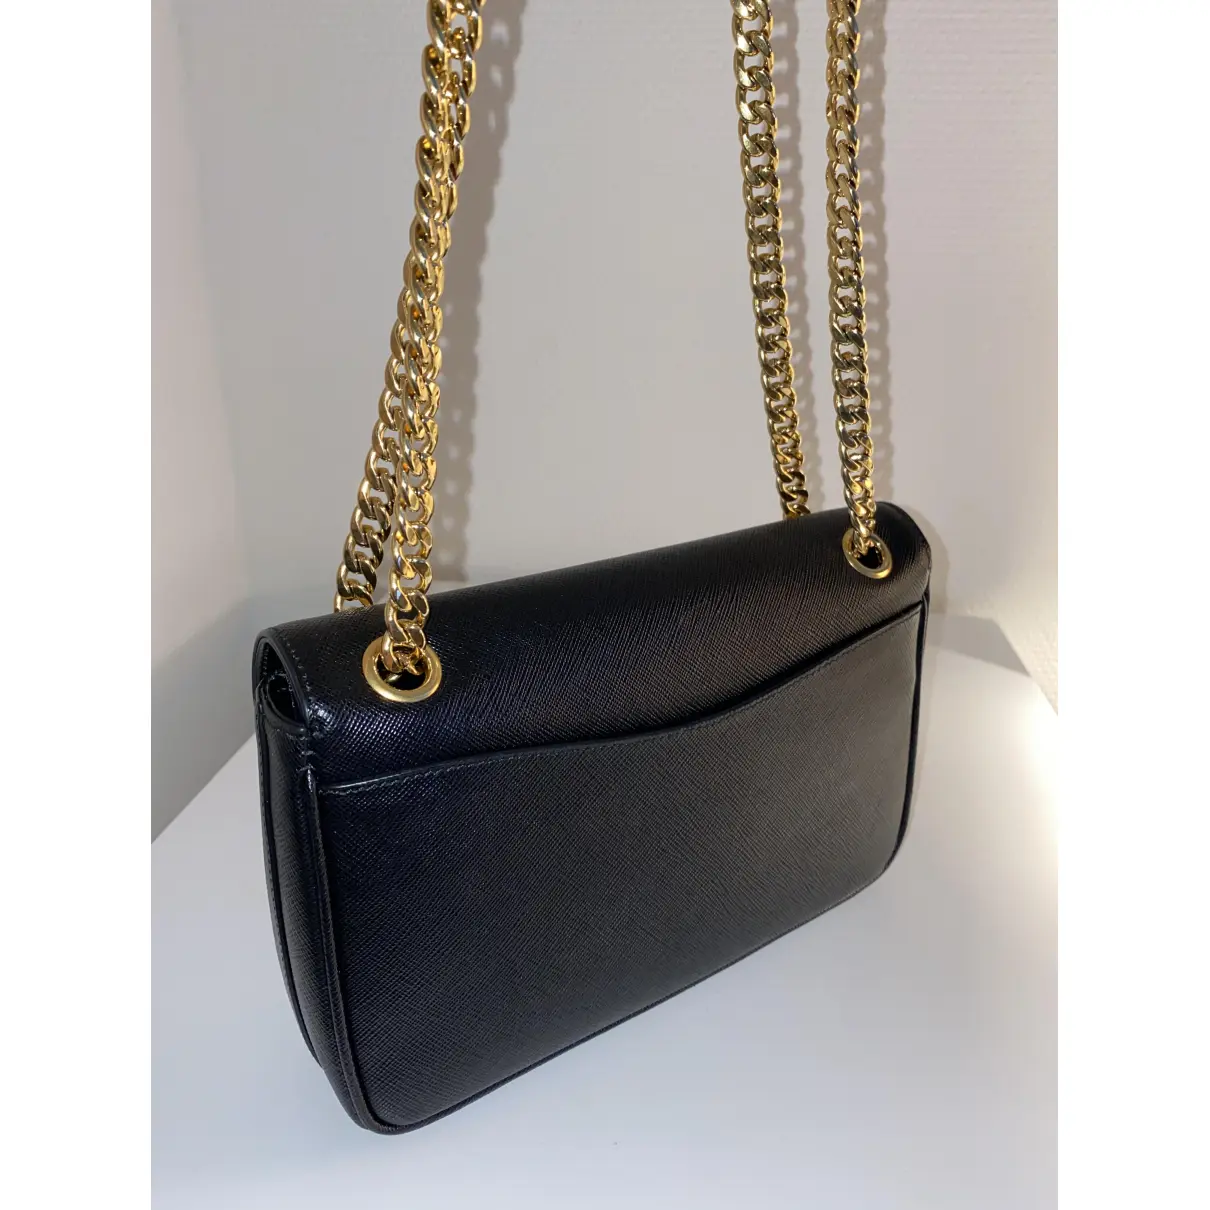 Buy Prada Diagramme leather handbag online